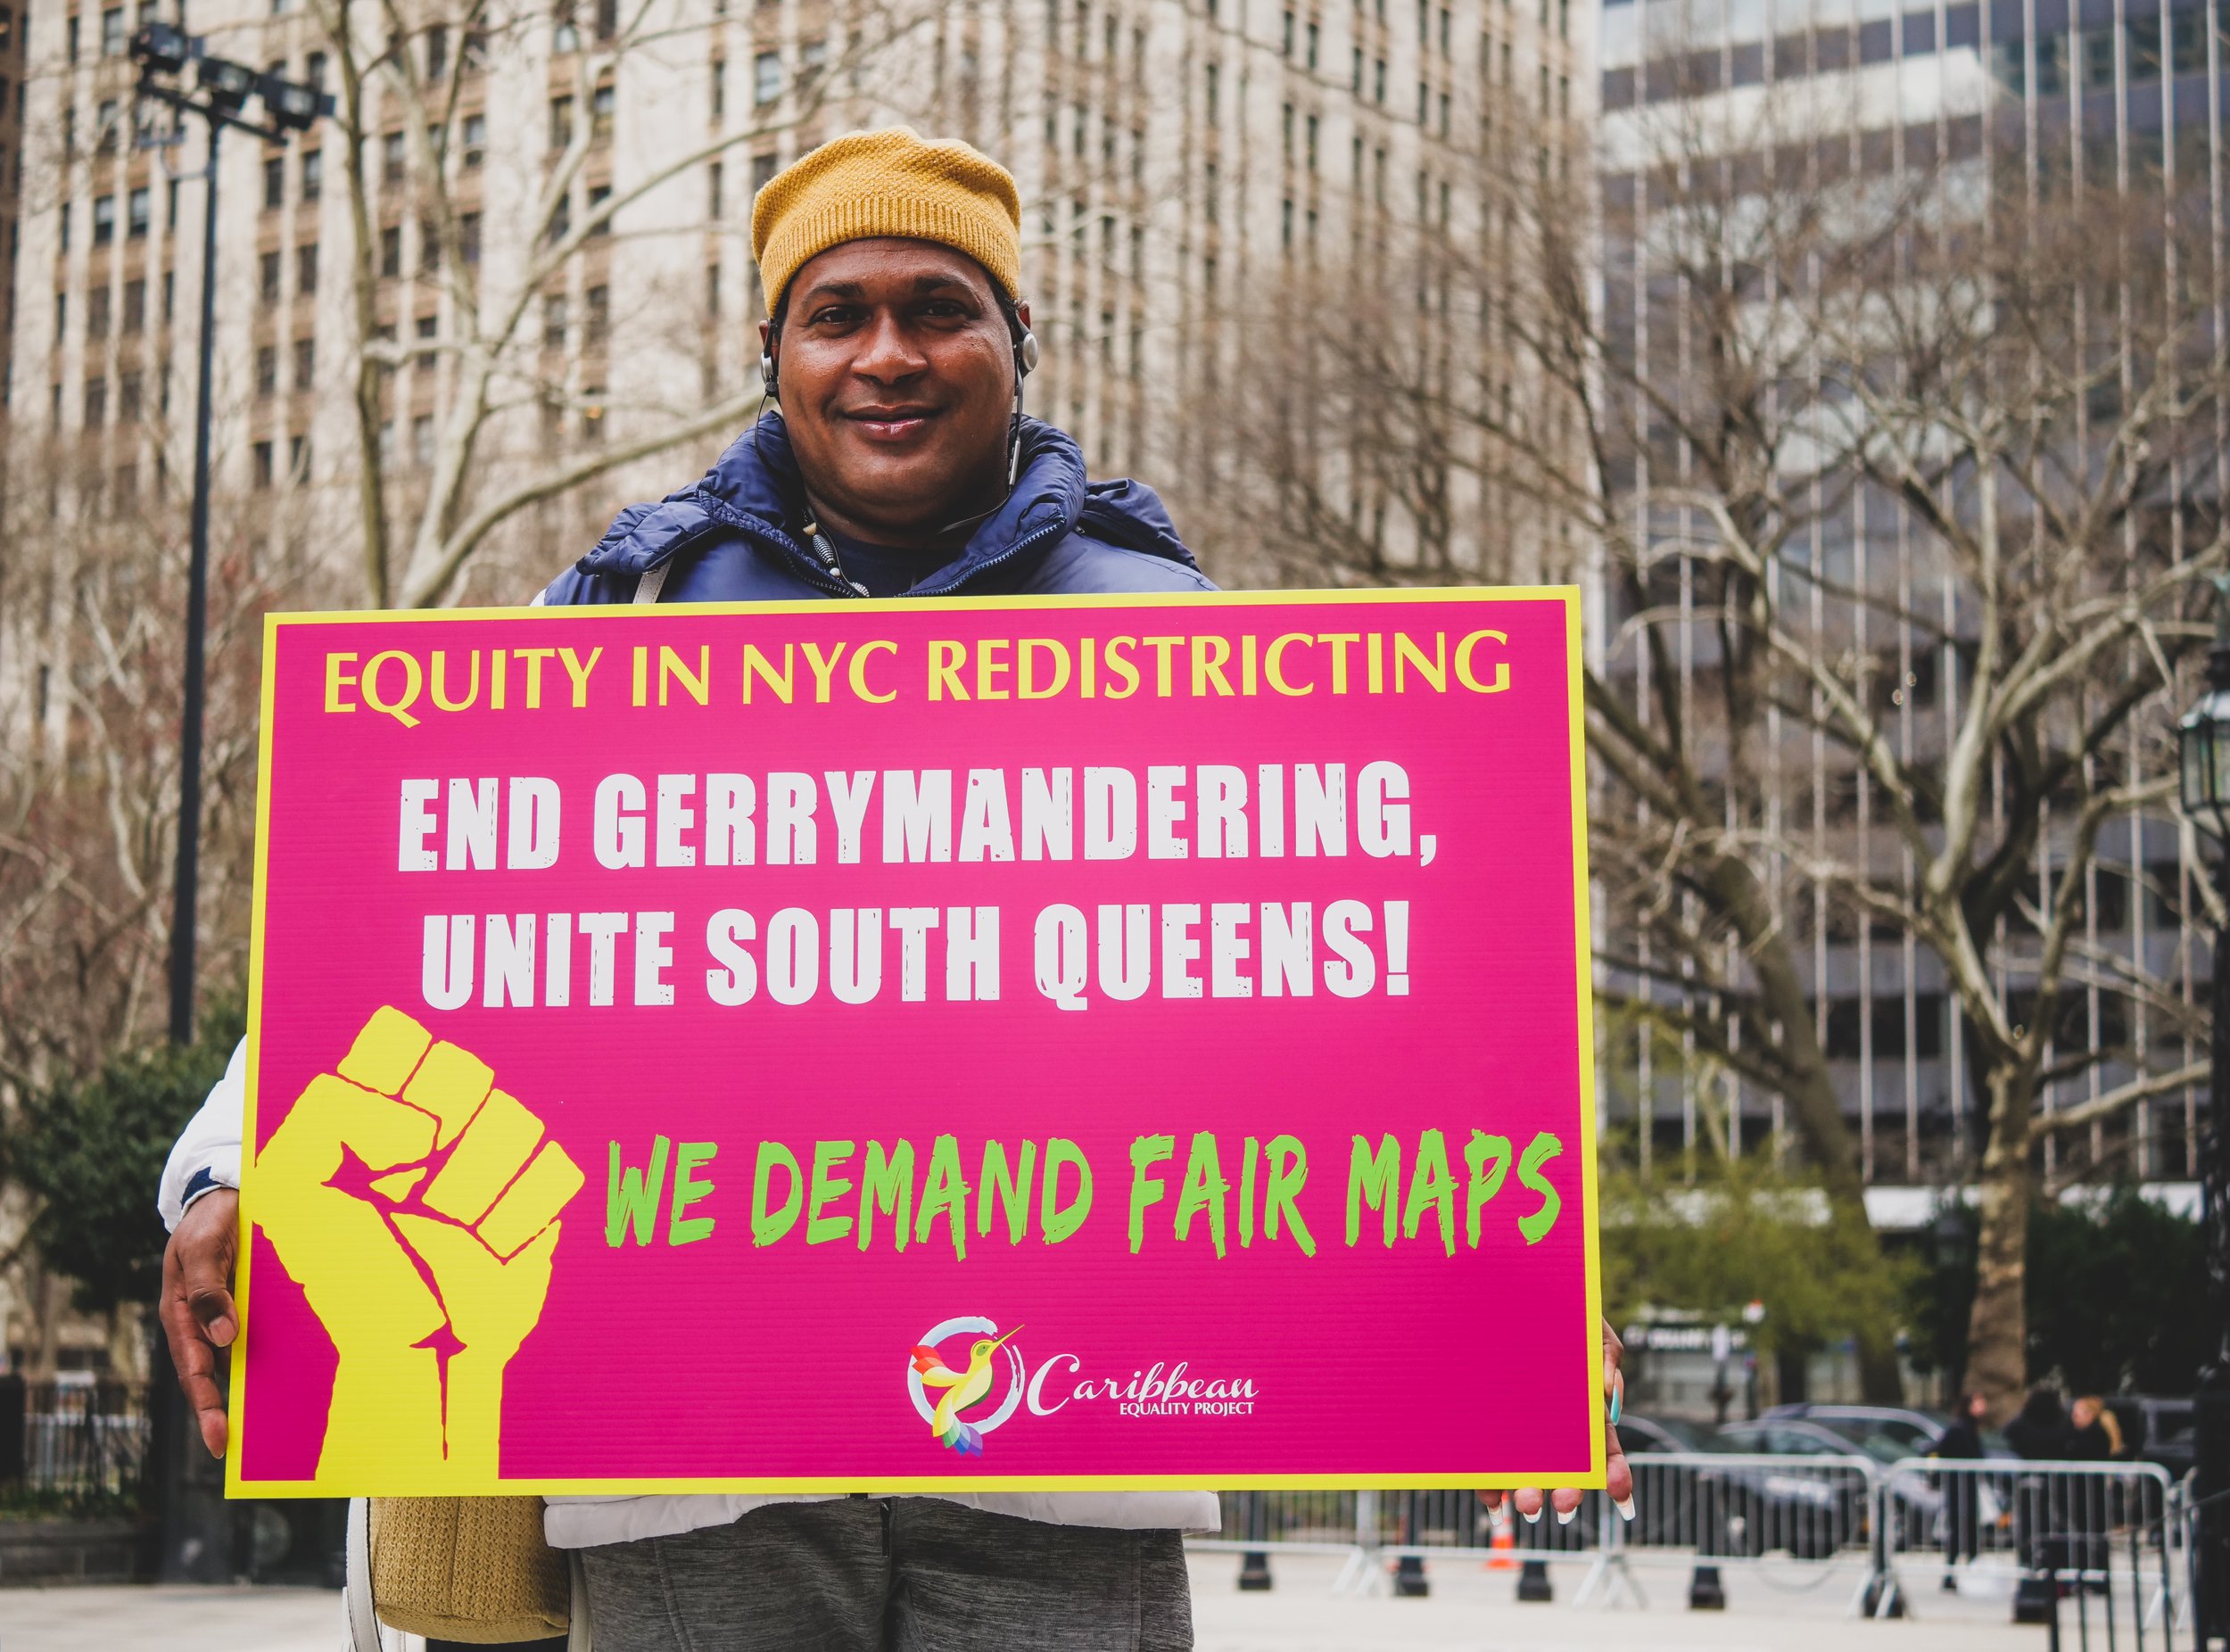 19 Caribbean Equality Project member posing near New York City Hall.jpg